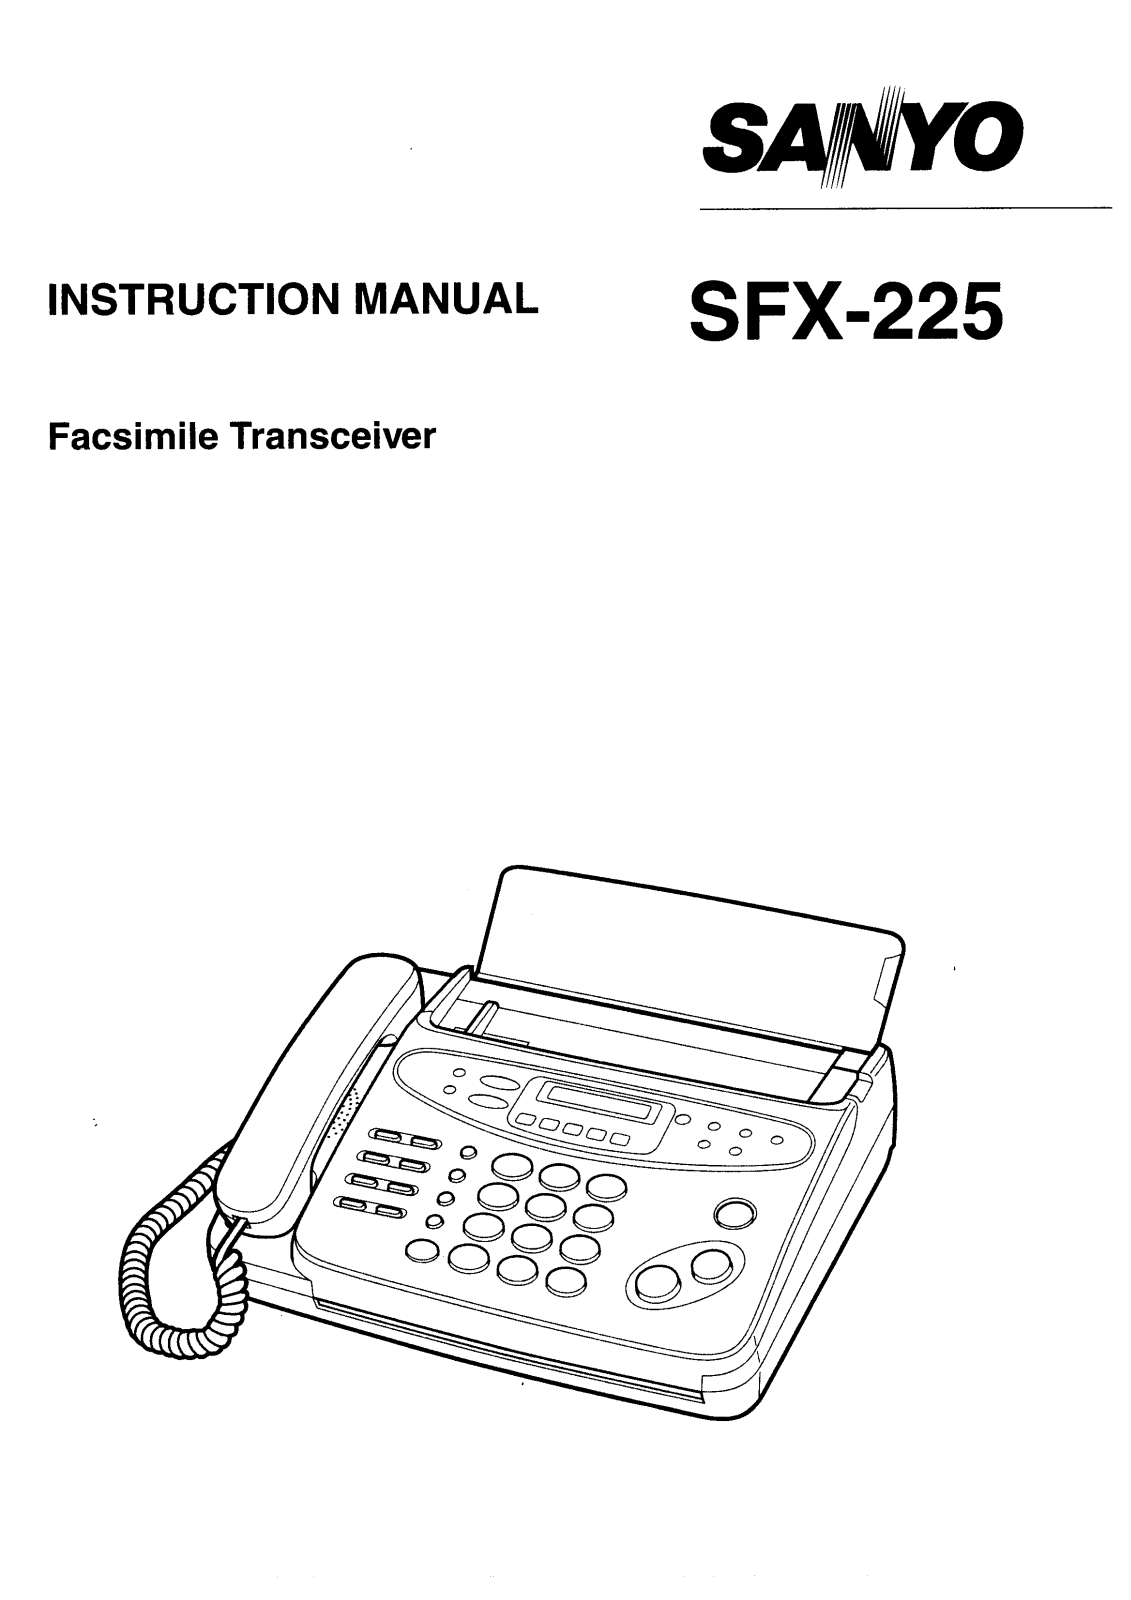 Sanyo SFX-225 Instruction Manual